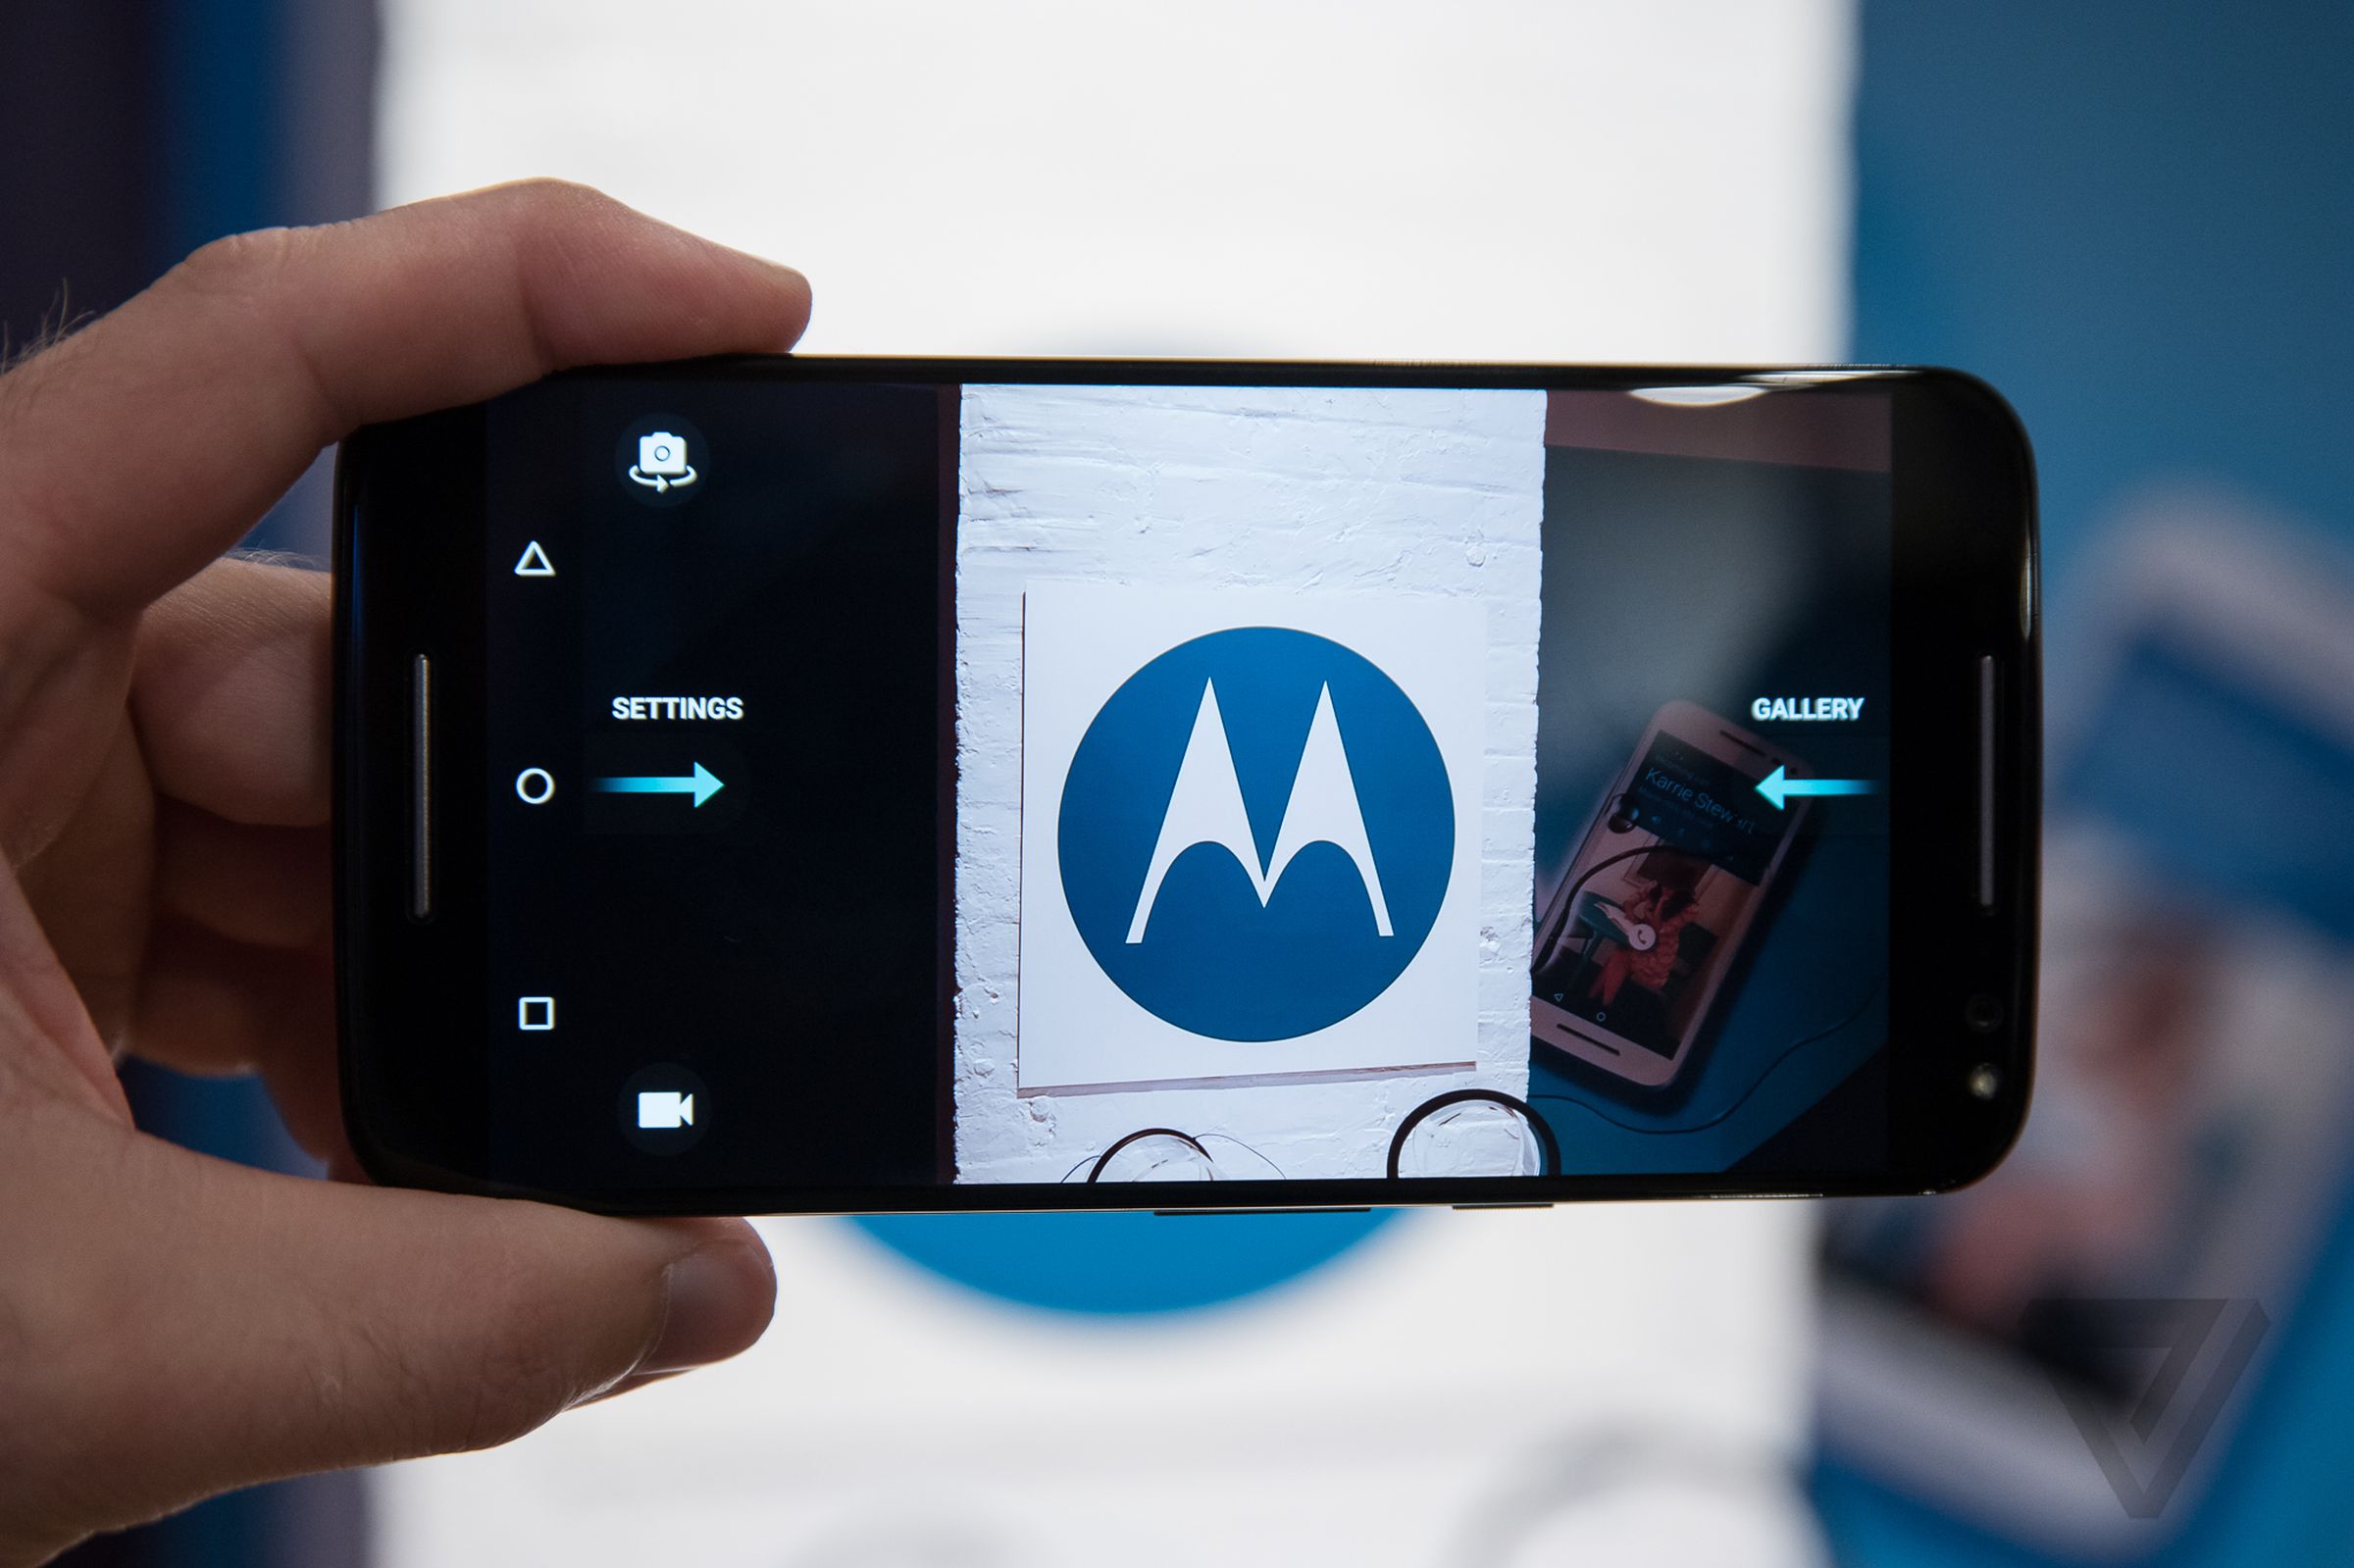 Motorola Moto X Style Pure Edition photos